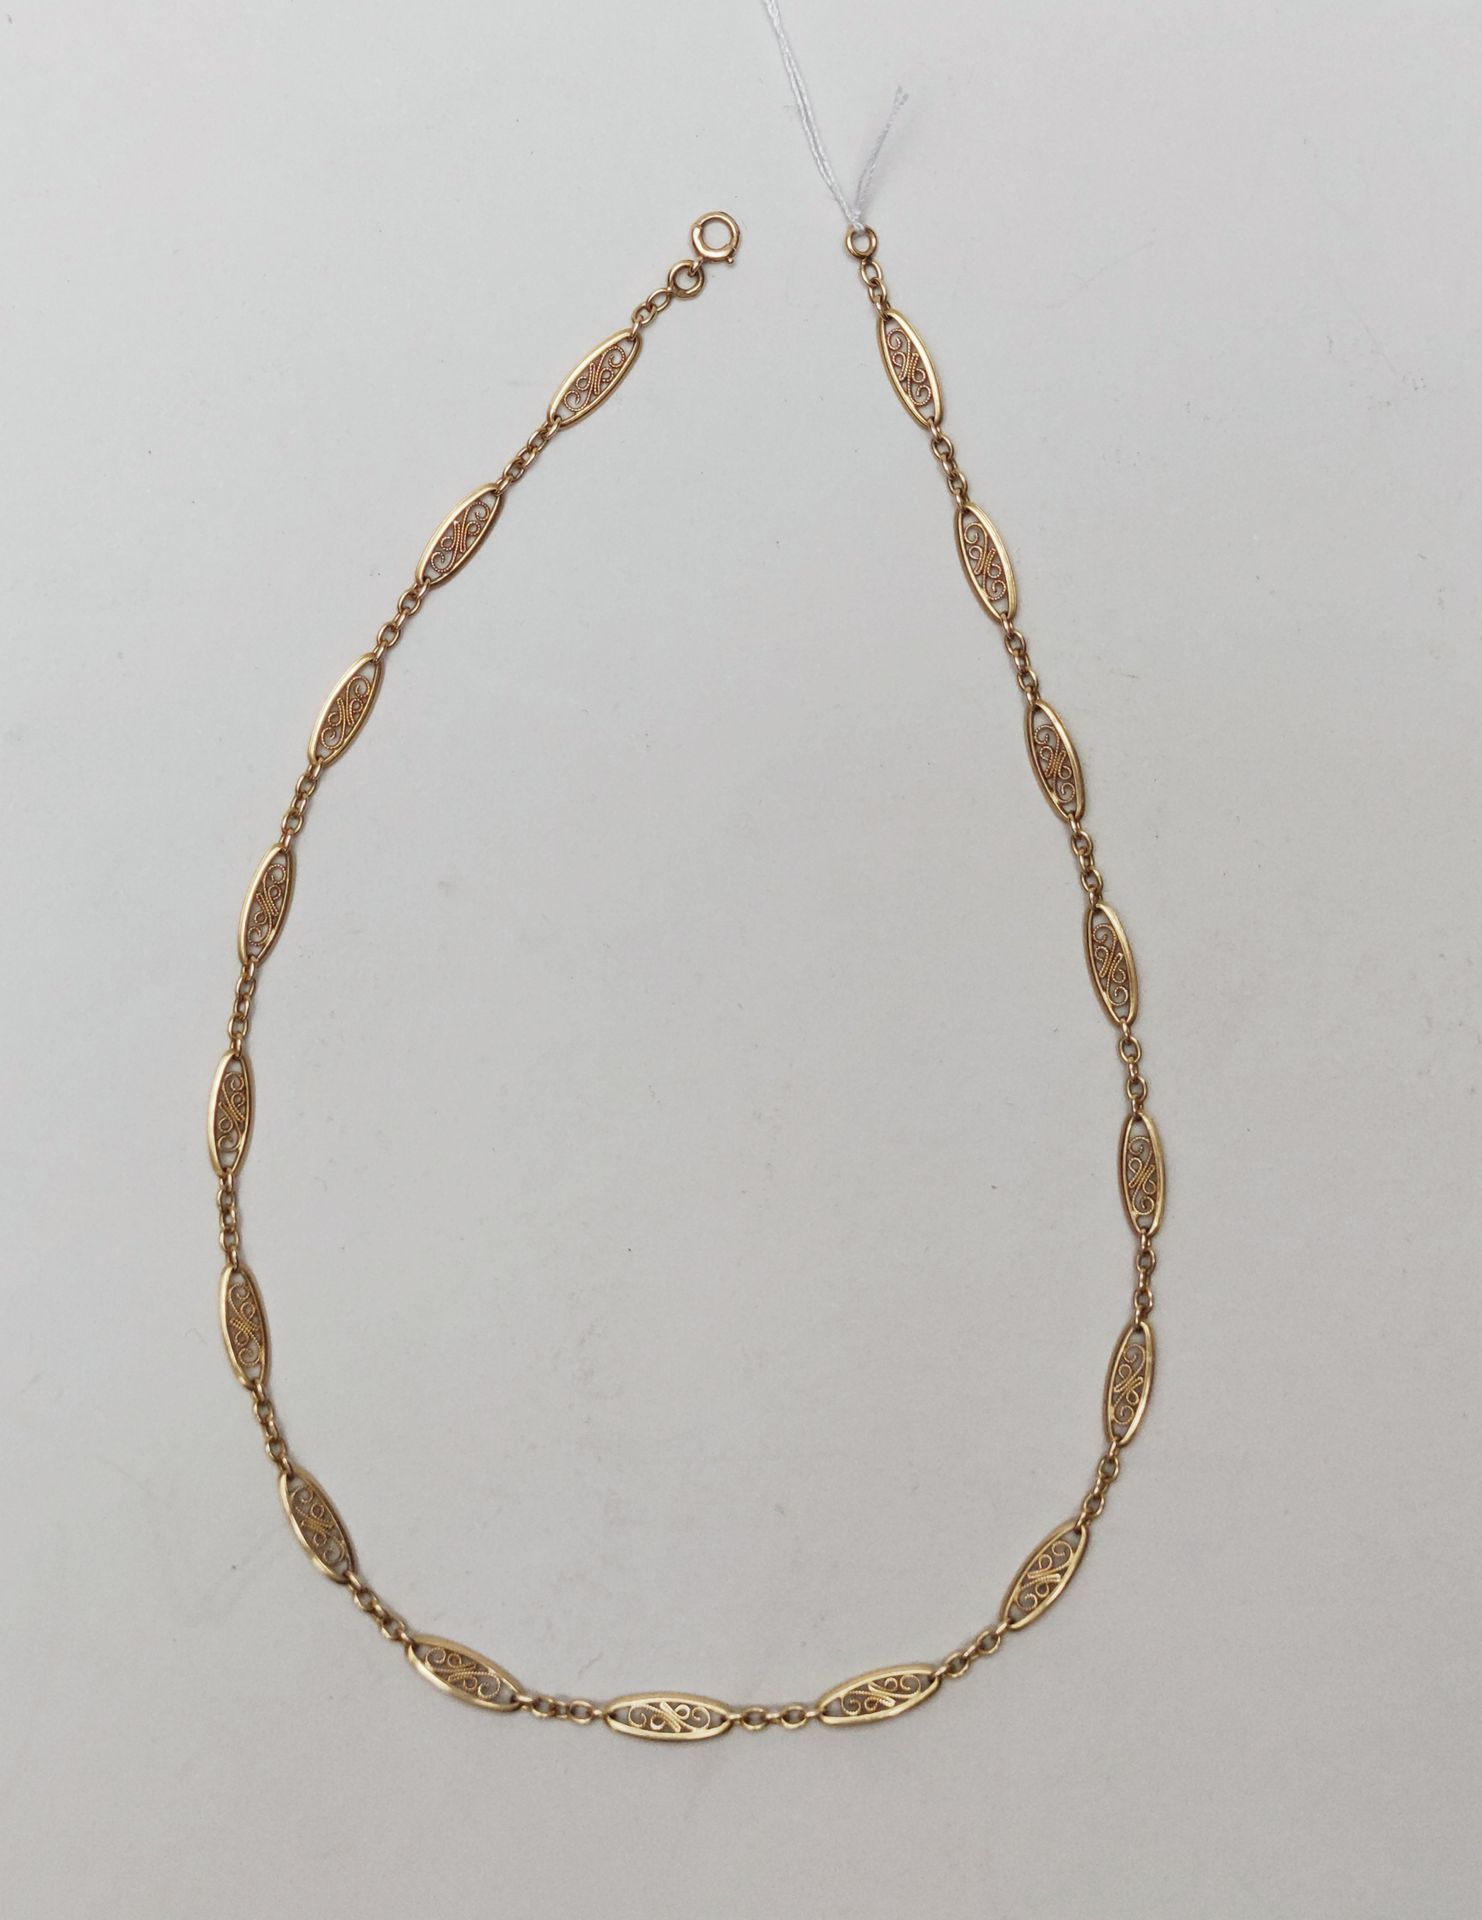 Null 750°/00的黄金链，带有17个镂空和丝状的橄榄形链节

长度：41厘米

重量：11.5克